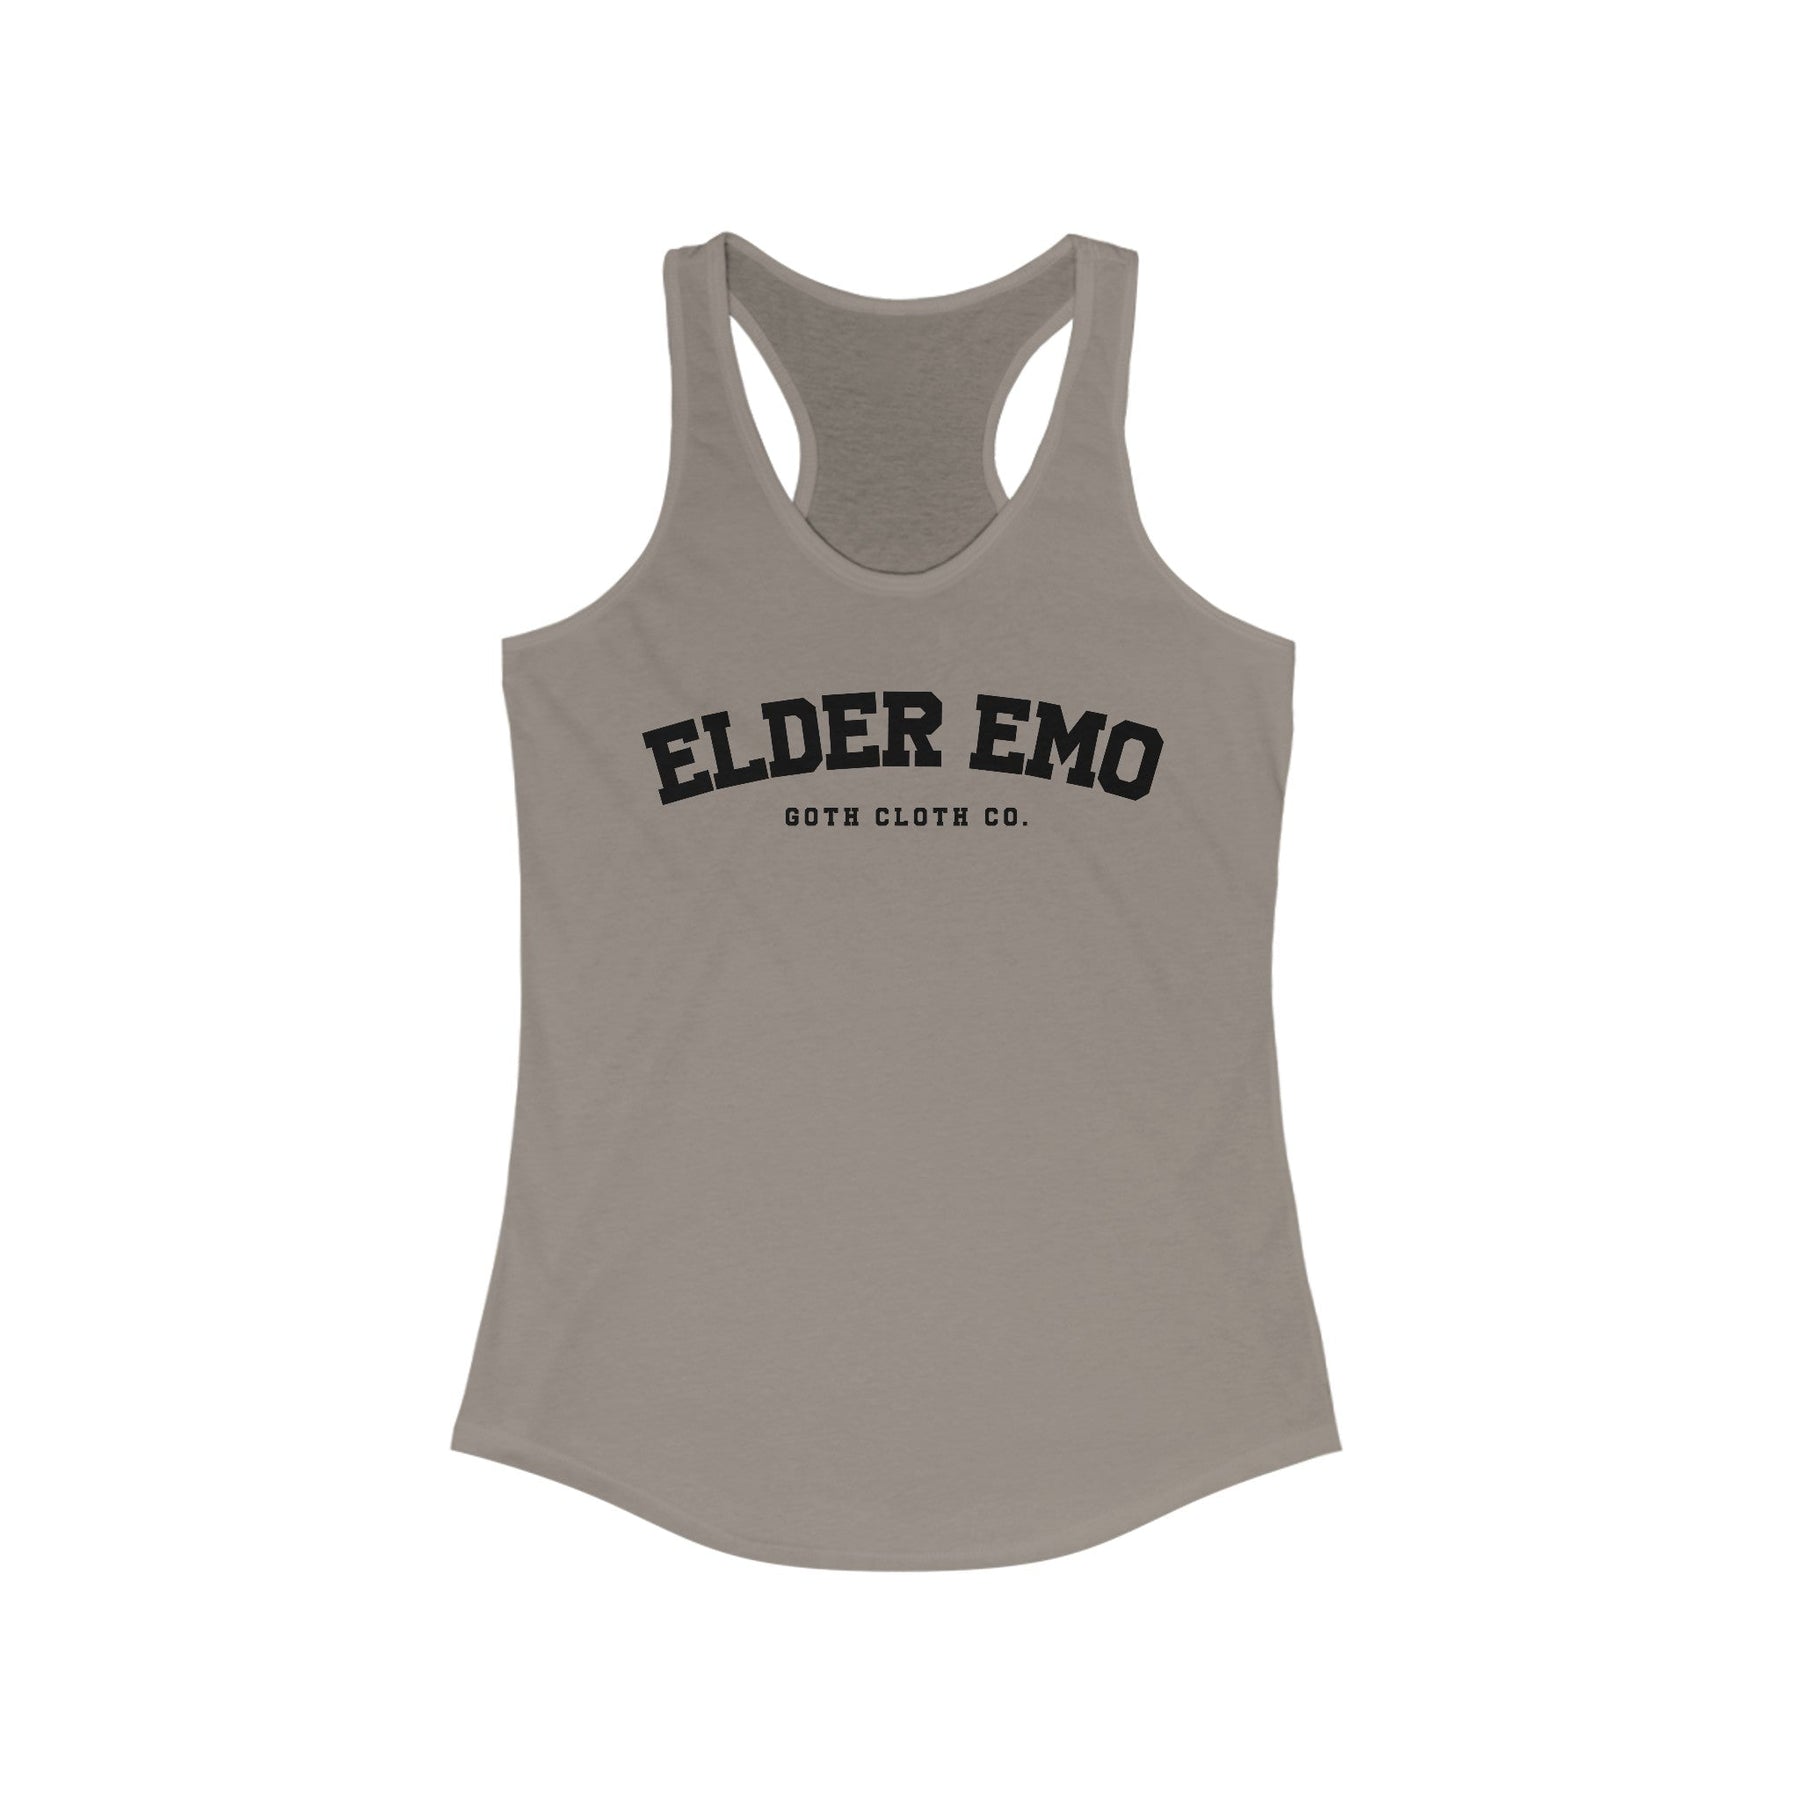 Elder Emo College Women's Racerback Tank - Goth Cloth Co.Tank Top66998630852011808239